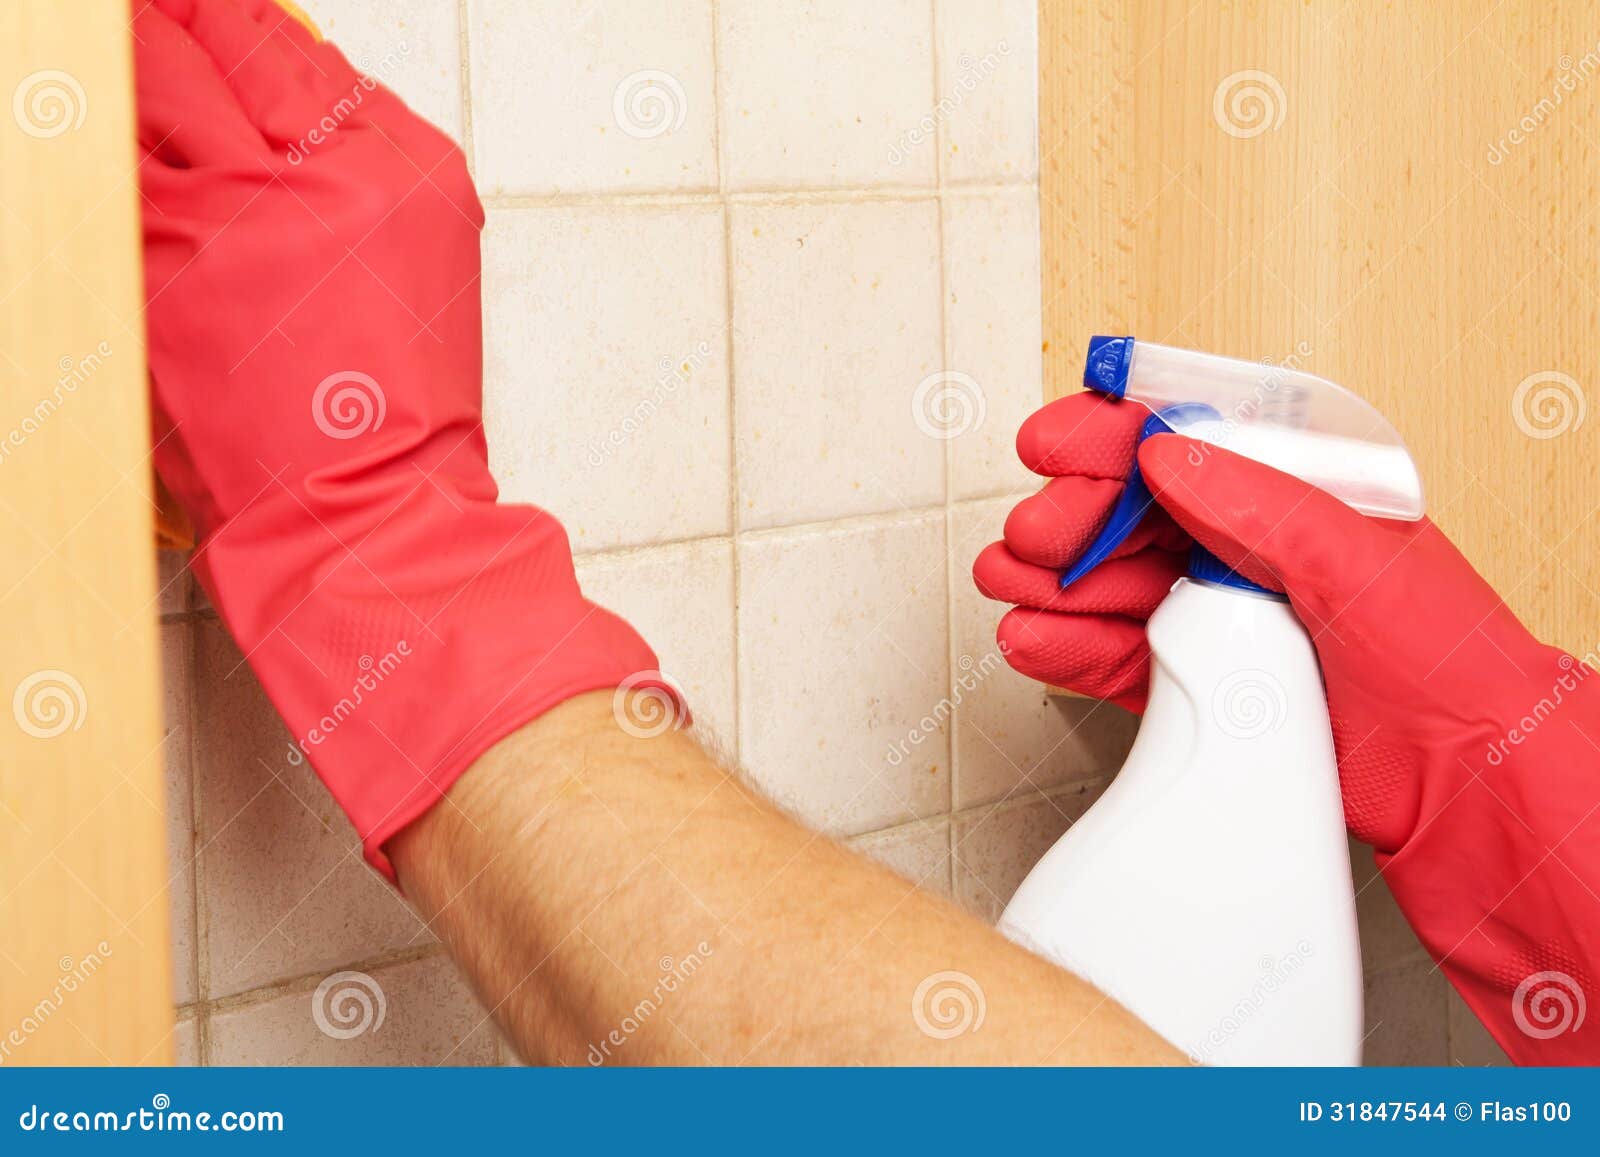 hands in rubber gloves scrubbing bathroom